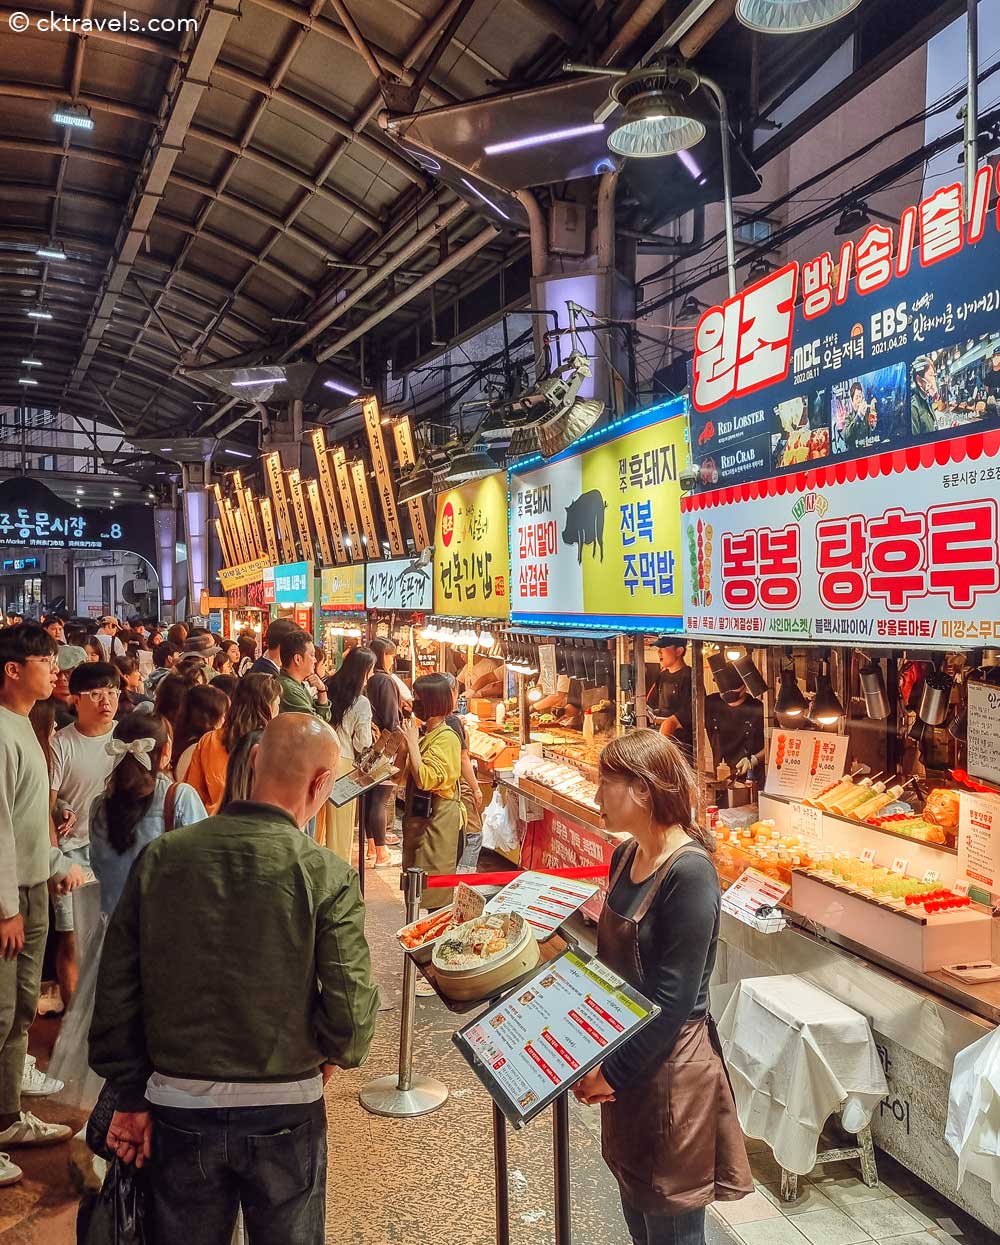 Dongmun Market Jeju Island South Korea